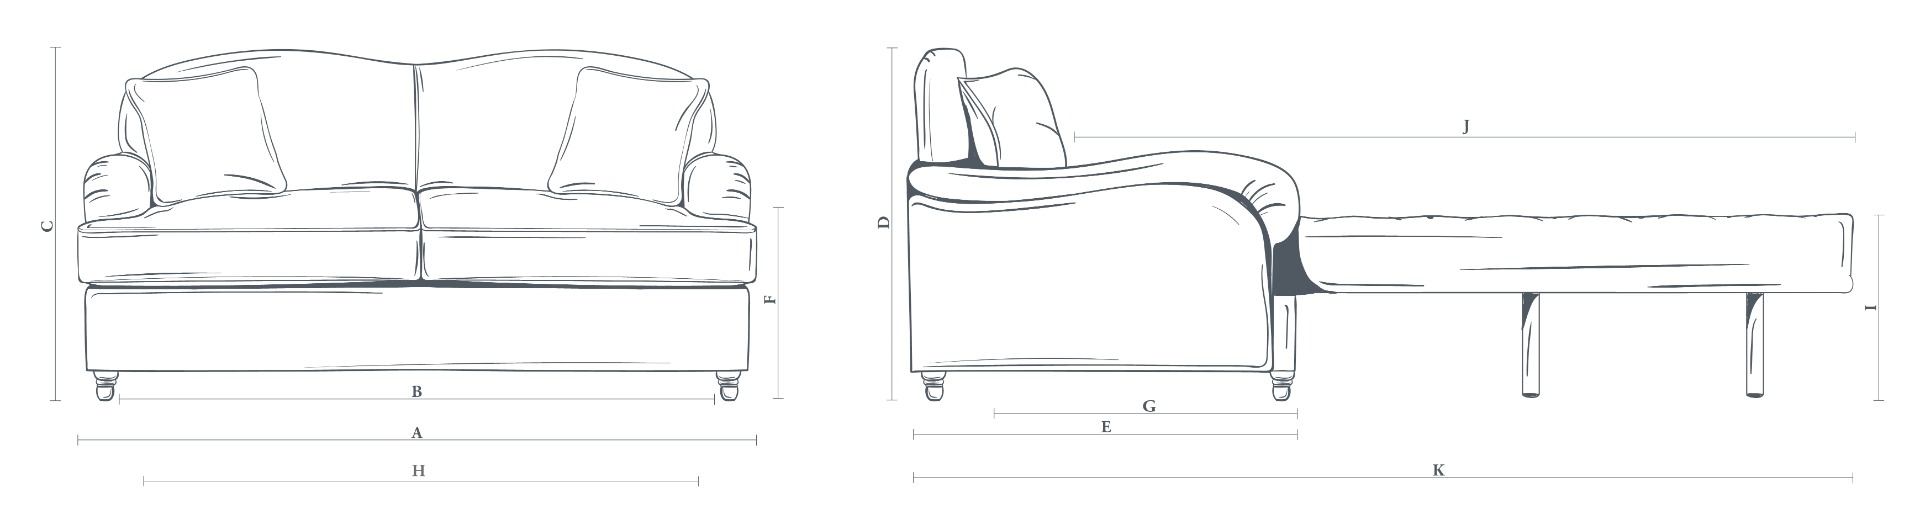 The Appledoe Sofa Bed 3 Seater